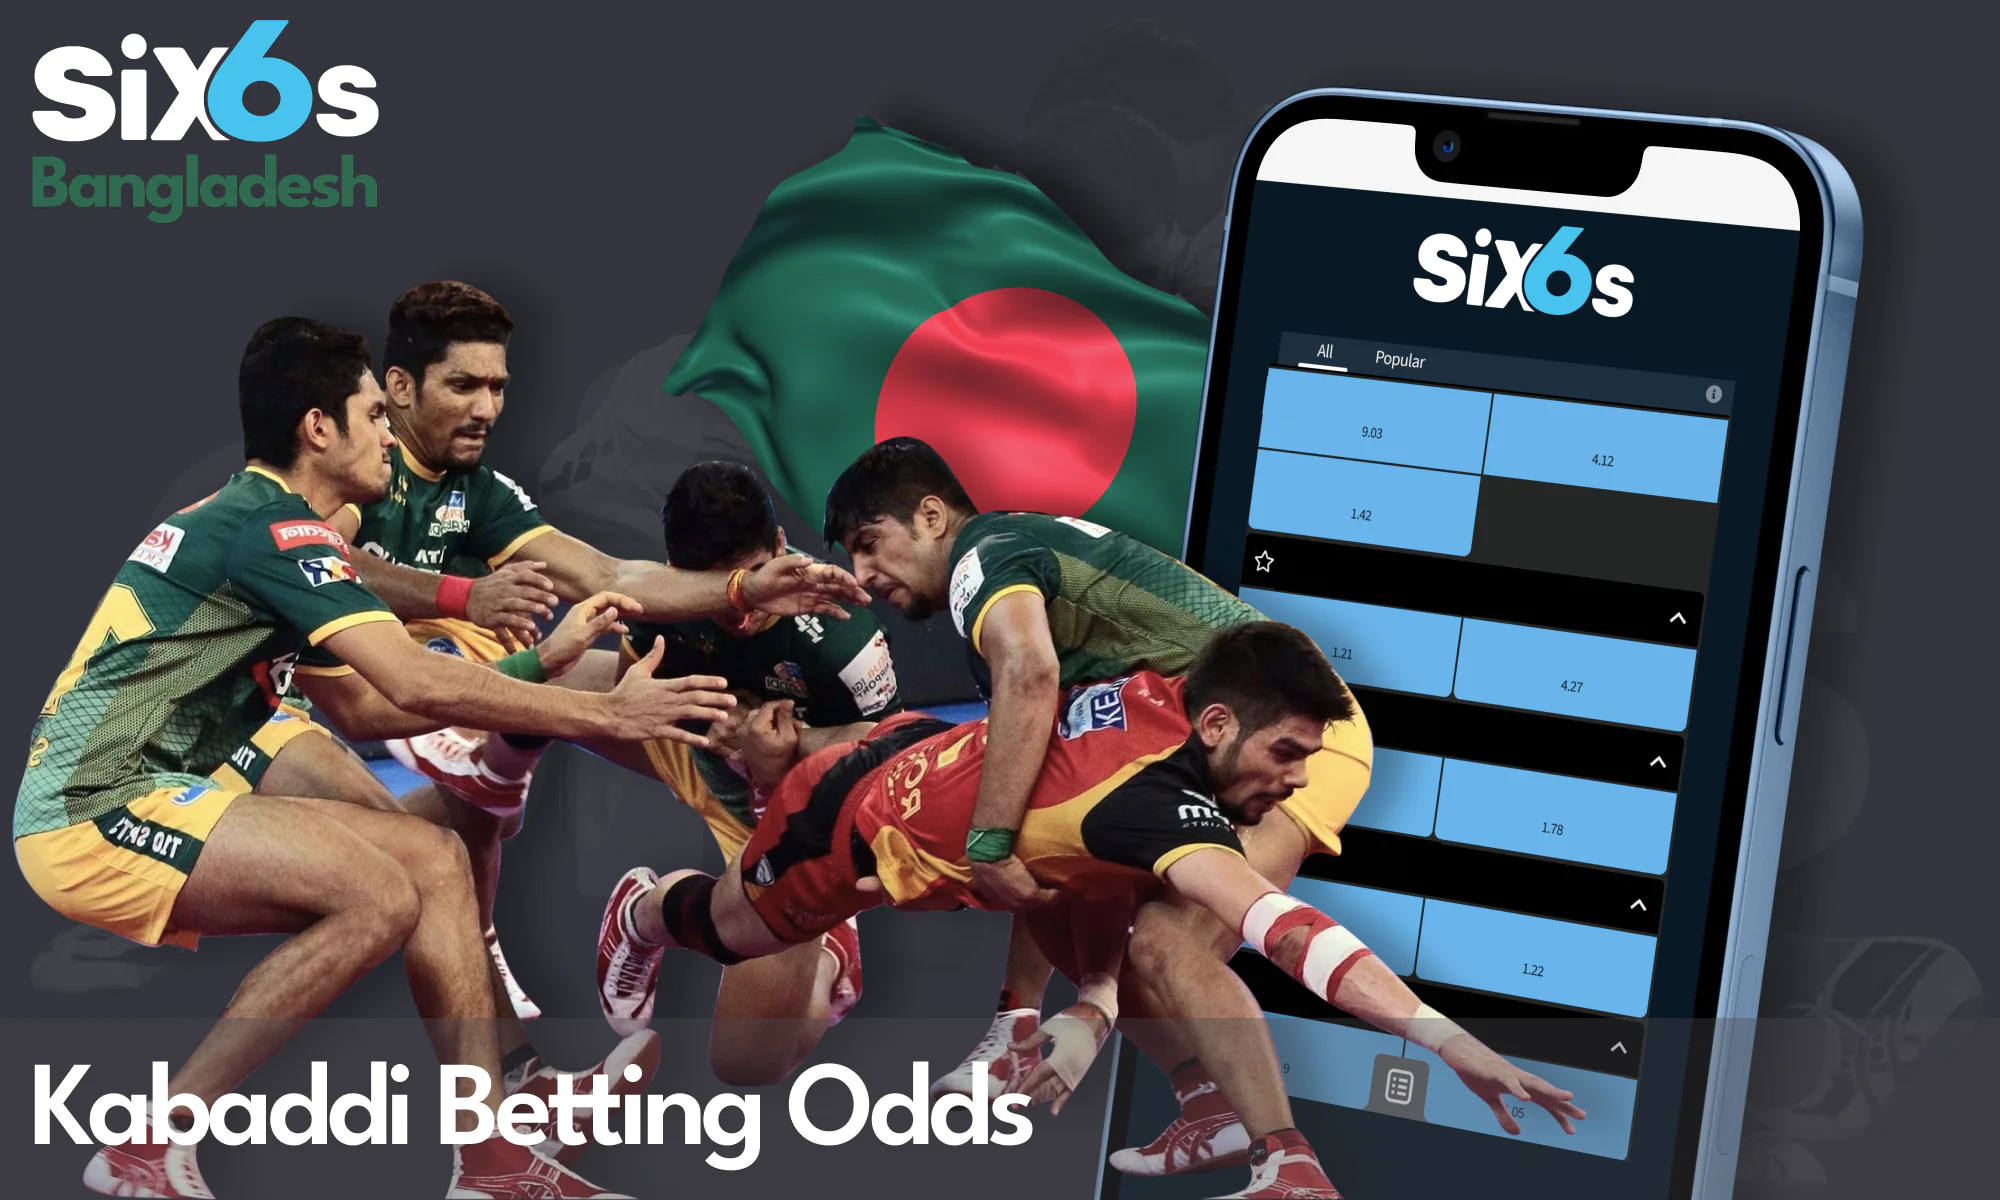 Kabaddi Betting Odds for Six6s Players from Bangladesh